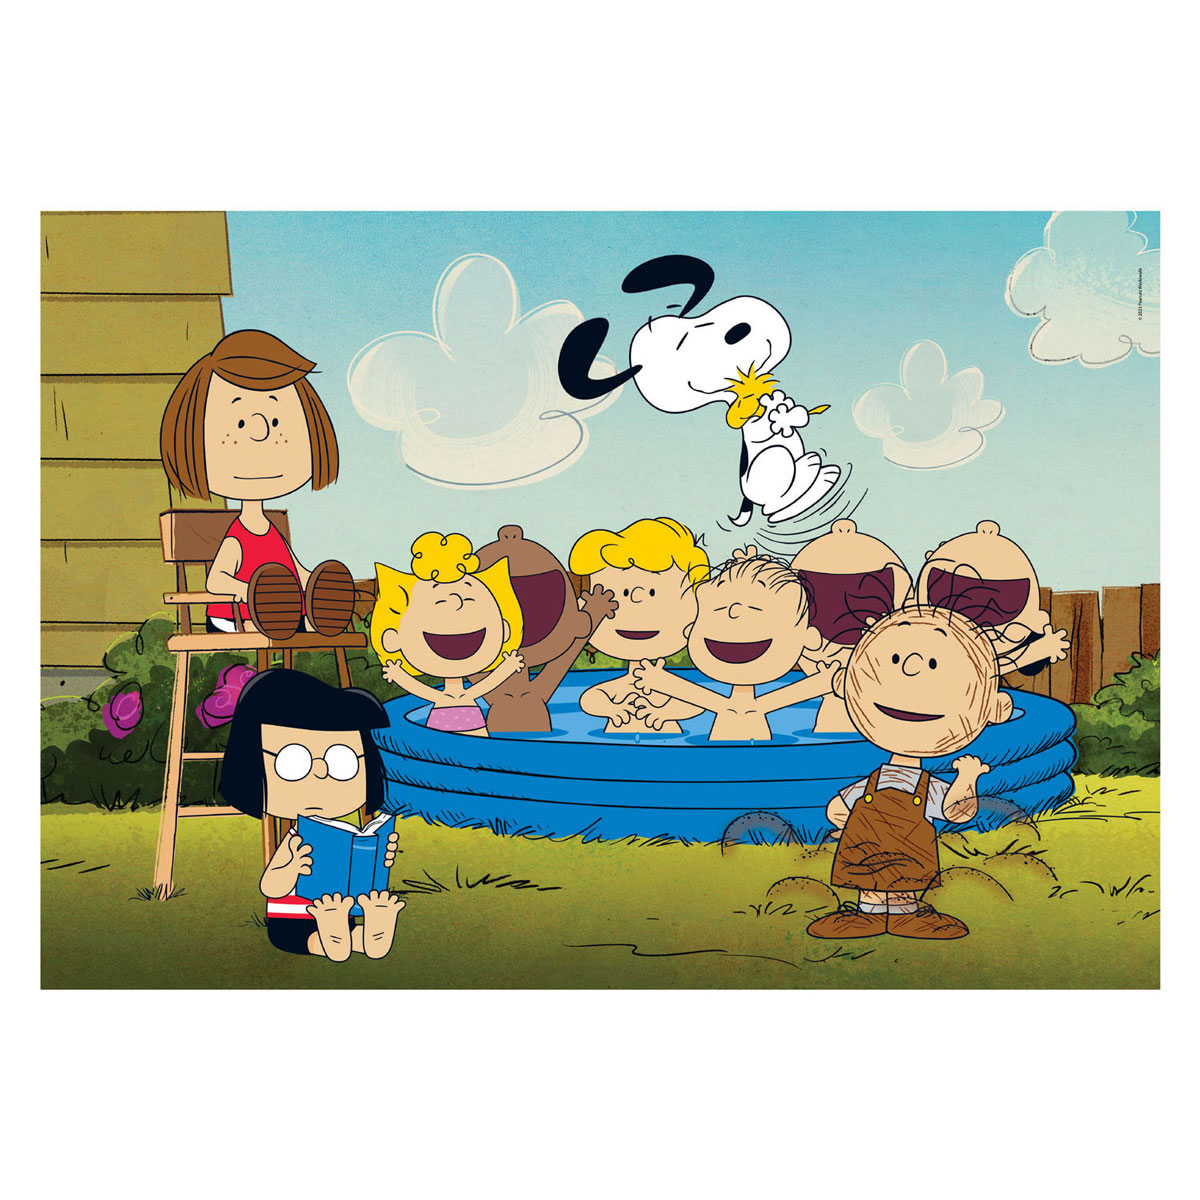 Clementoni Puzzle Peanuts Snoopy, 104 pièces.